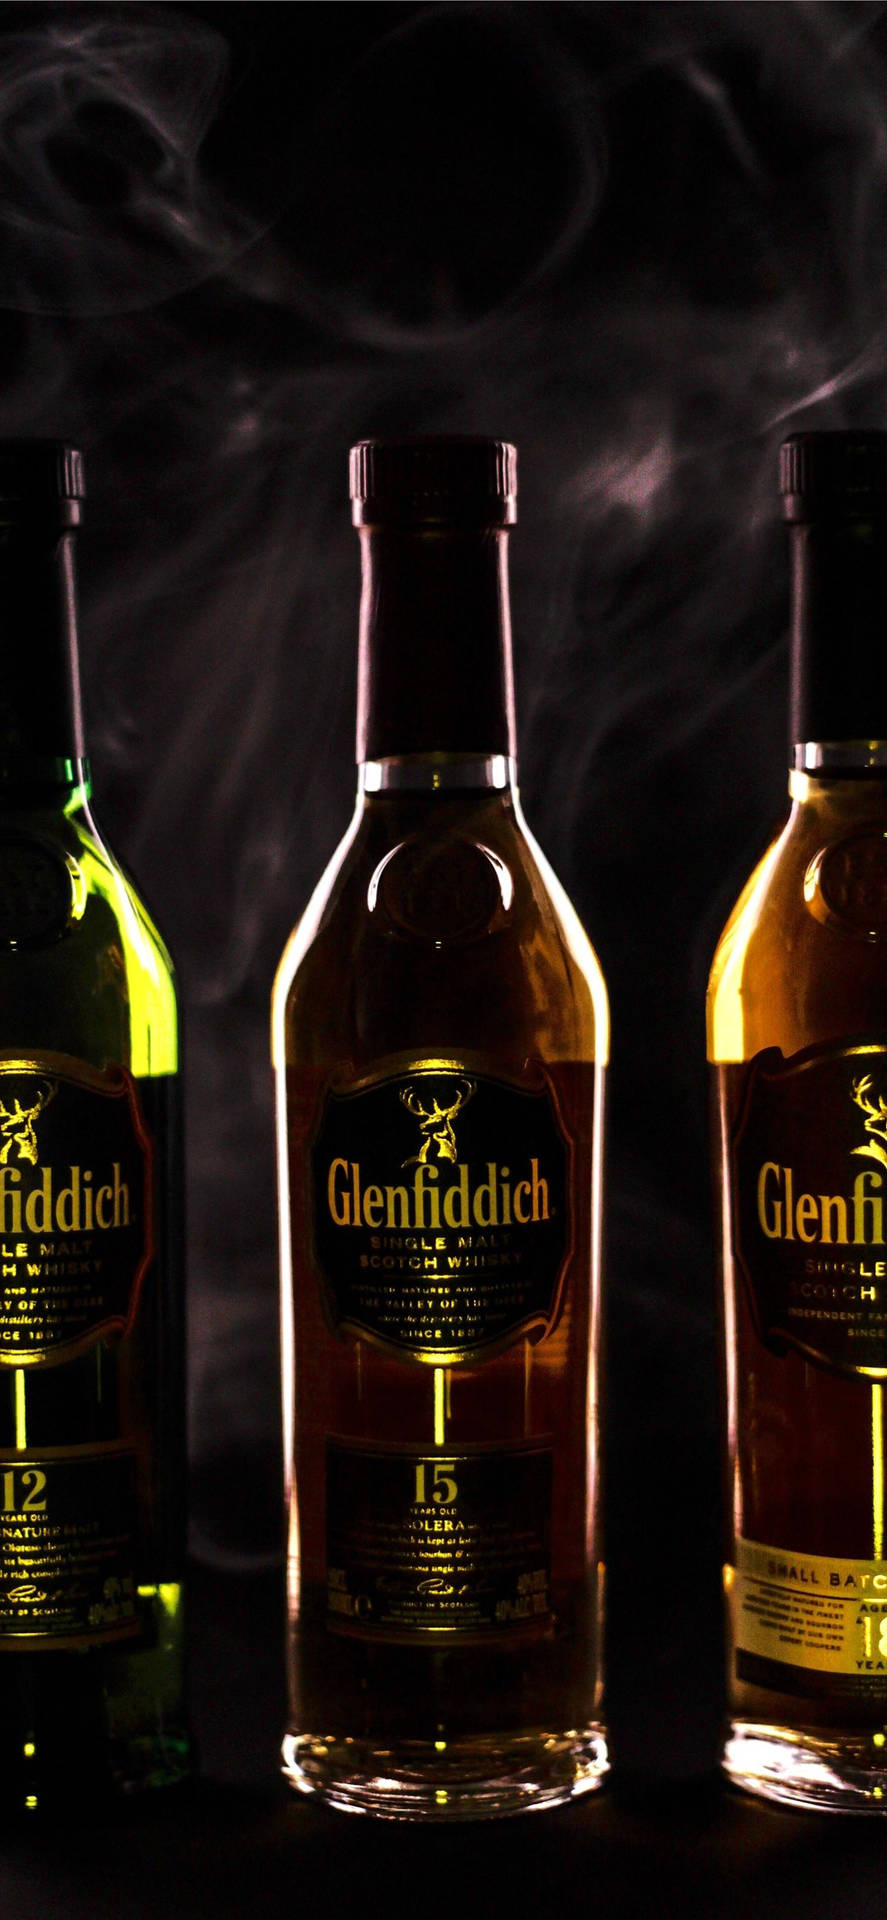 Glenfiddich Whiskies In Dim Lighting Wallpaper